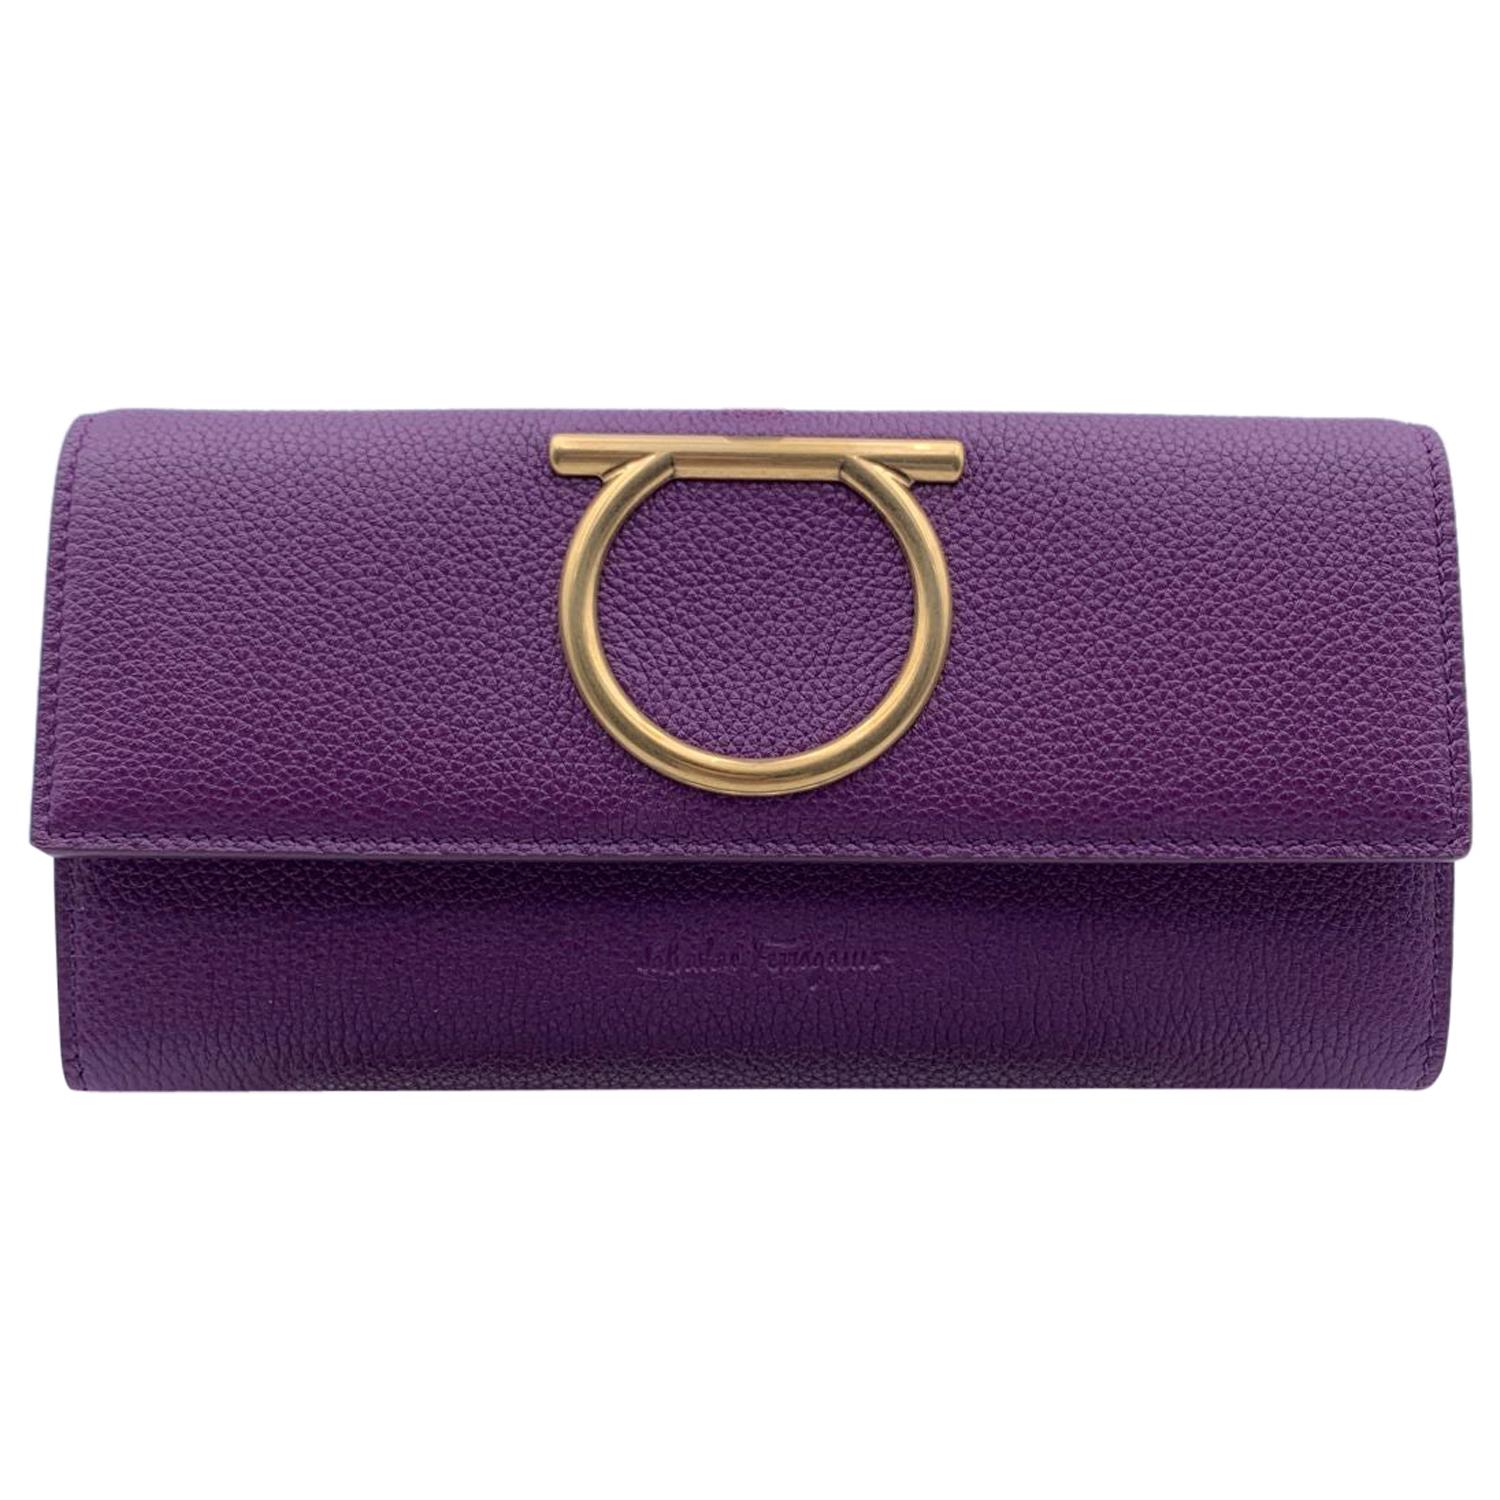 Salvatore Ferragamo Purple Leather Gancino Continental Wallet Purse